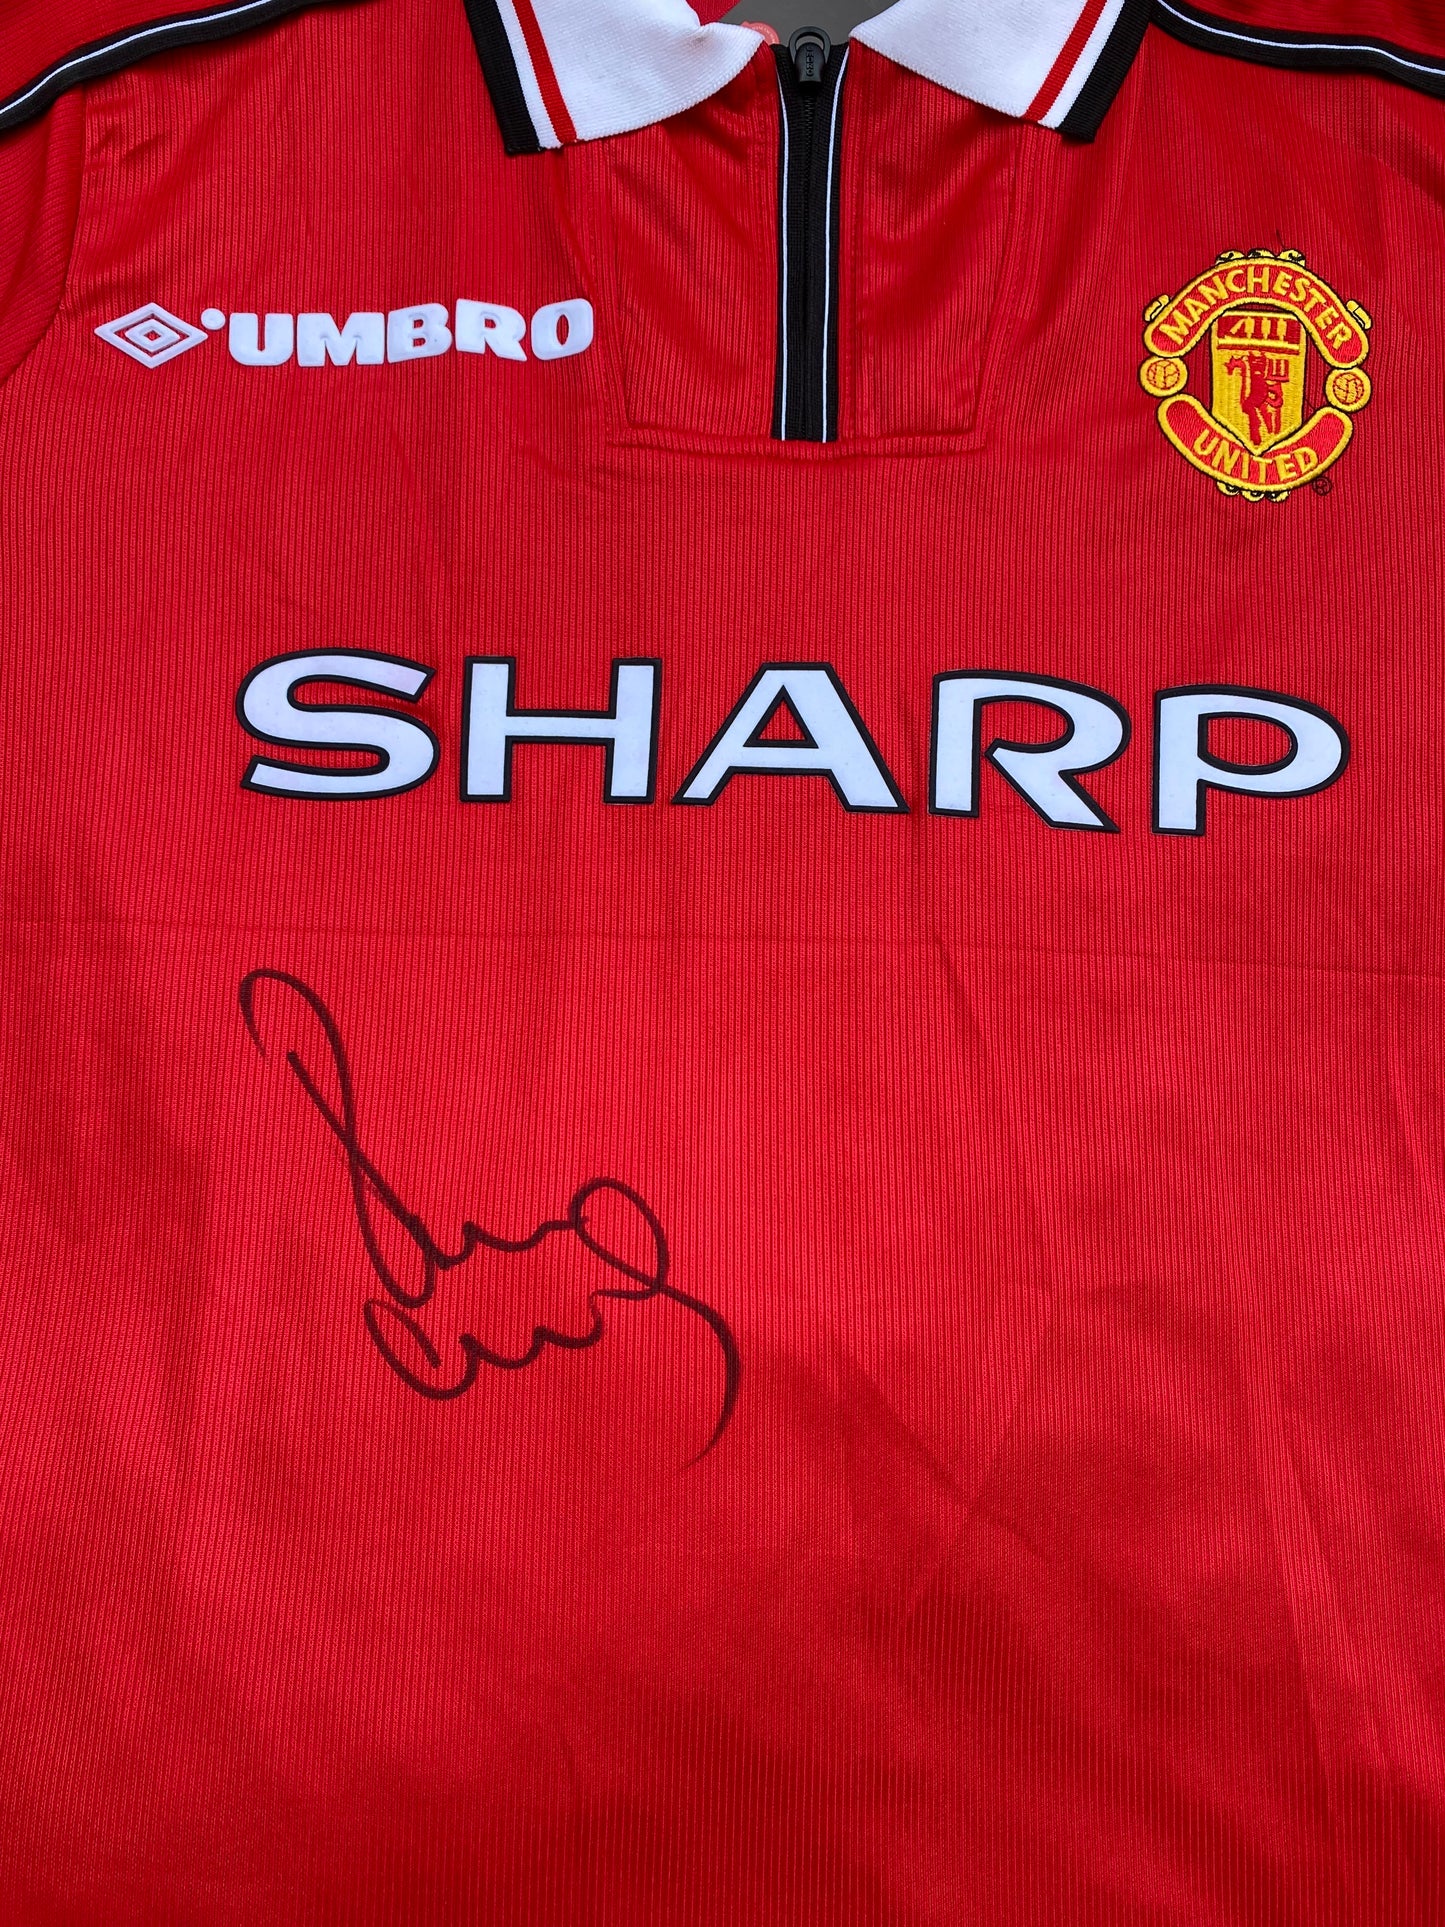 Paul Scholes - Manchester United - hand-signed replica shirt - MUFC memorabilia, football shirt (UNFRAMED)